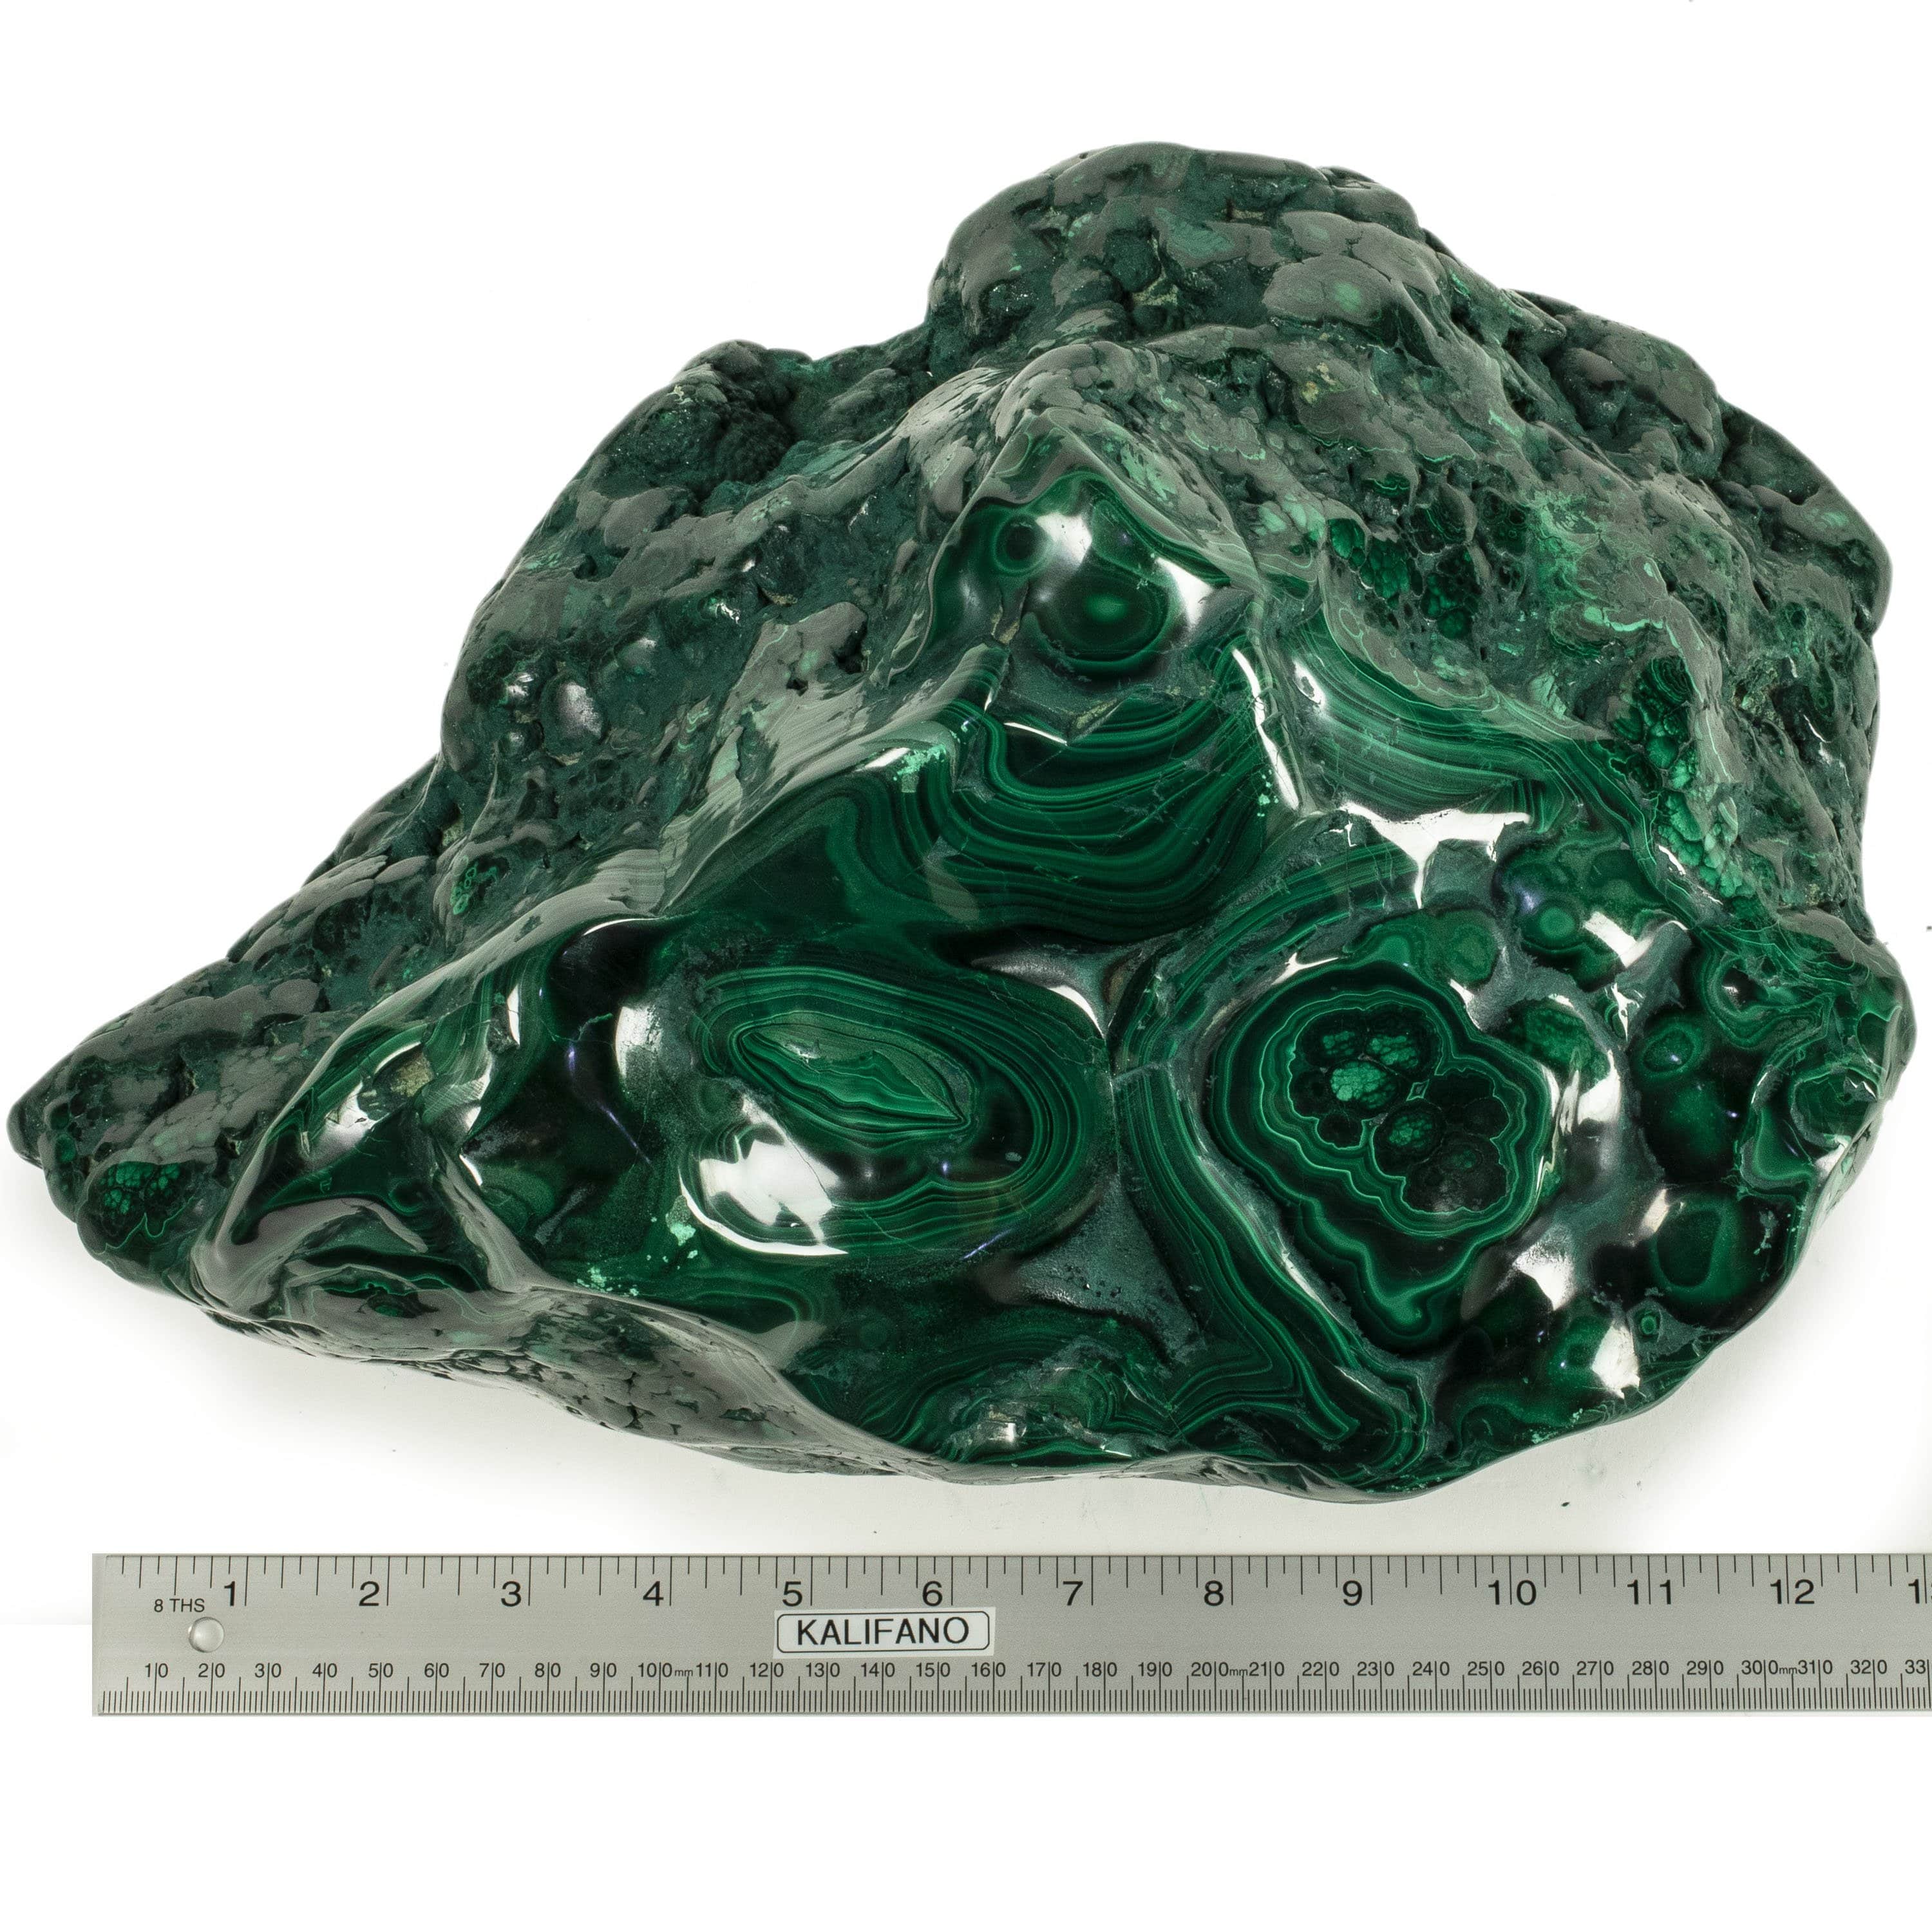 Kalifano Malachite Rare Natural Green Malachite Polished Freeform Specimen from Congo - 22.6 kg / 49.9 lbs MA14400.001